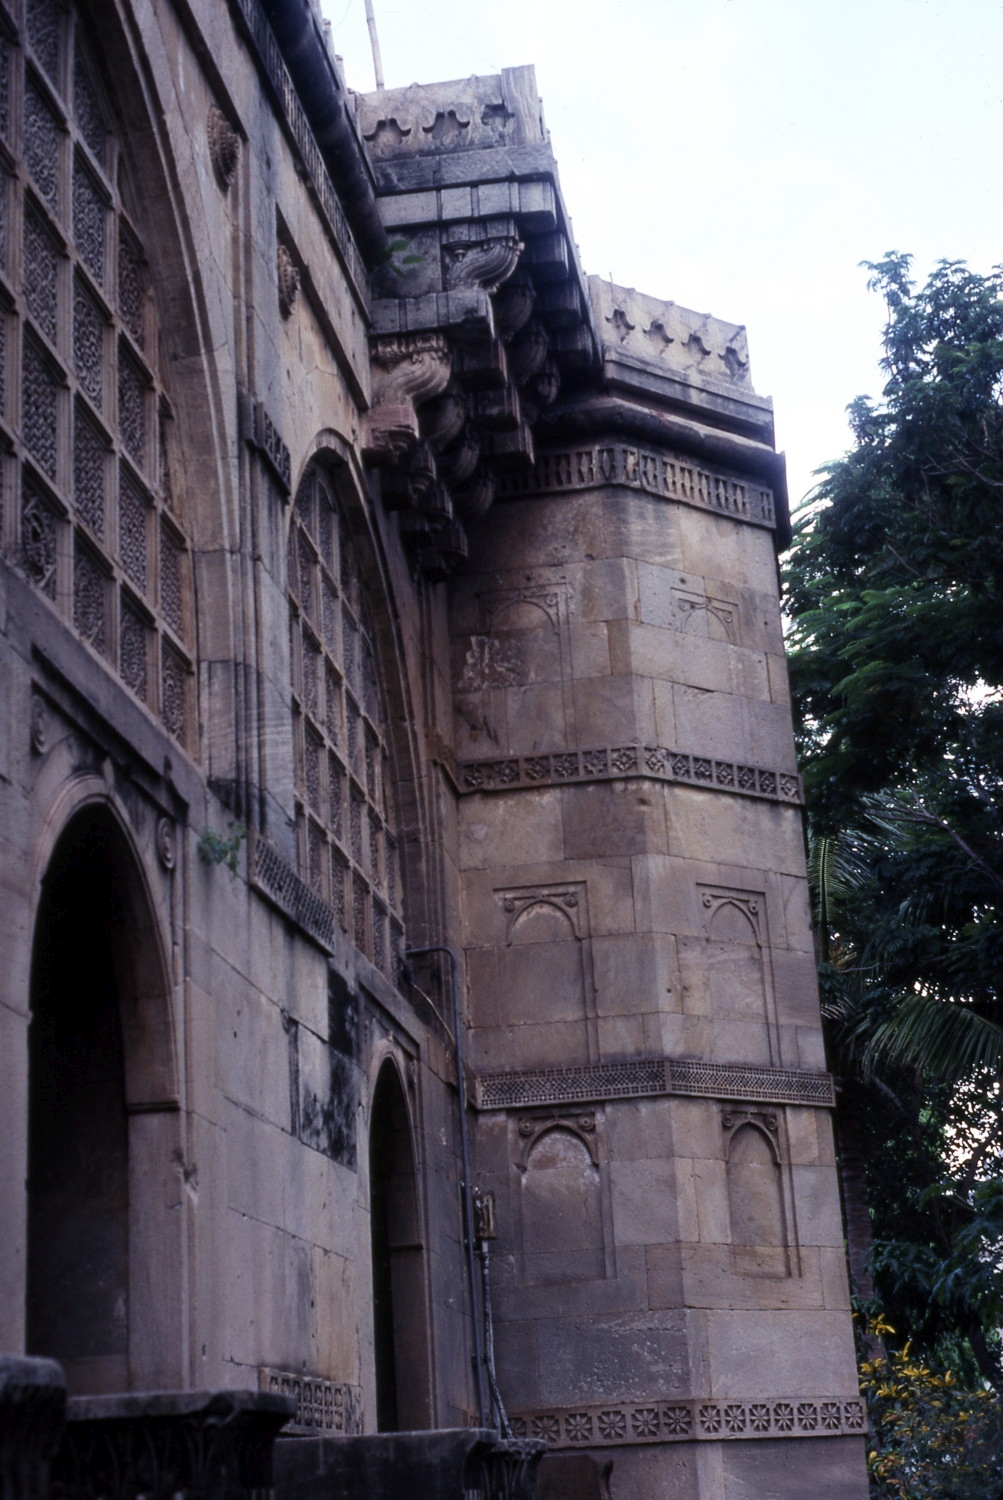 Exterior, detail of corner octagonal tower